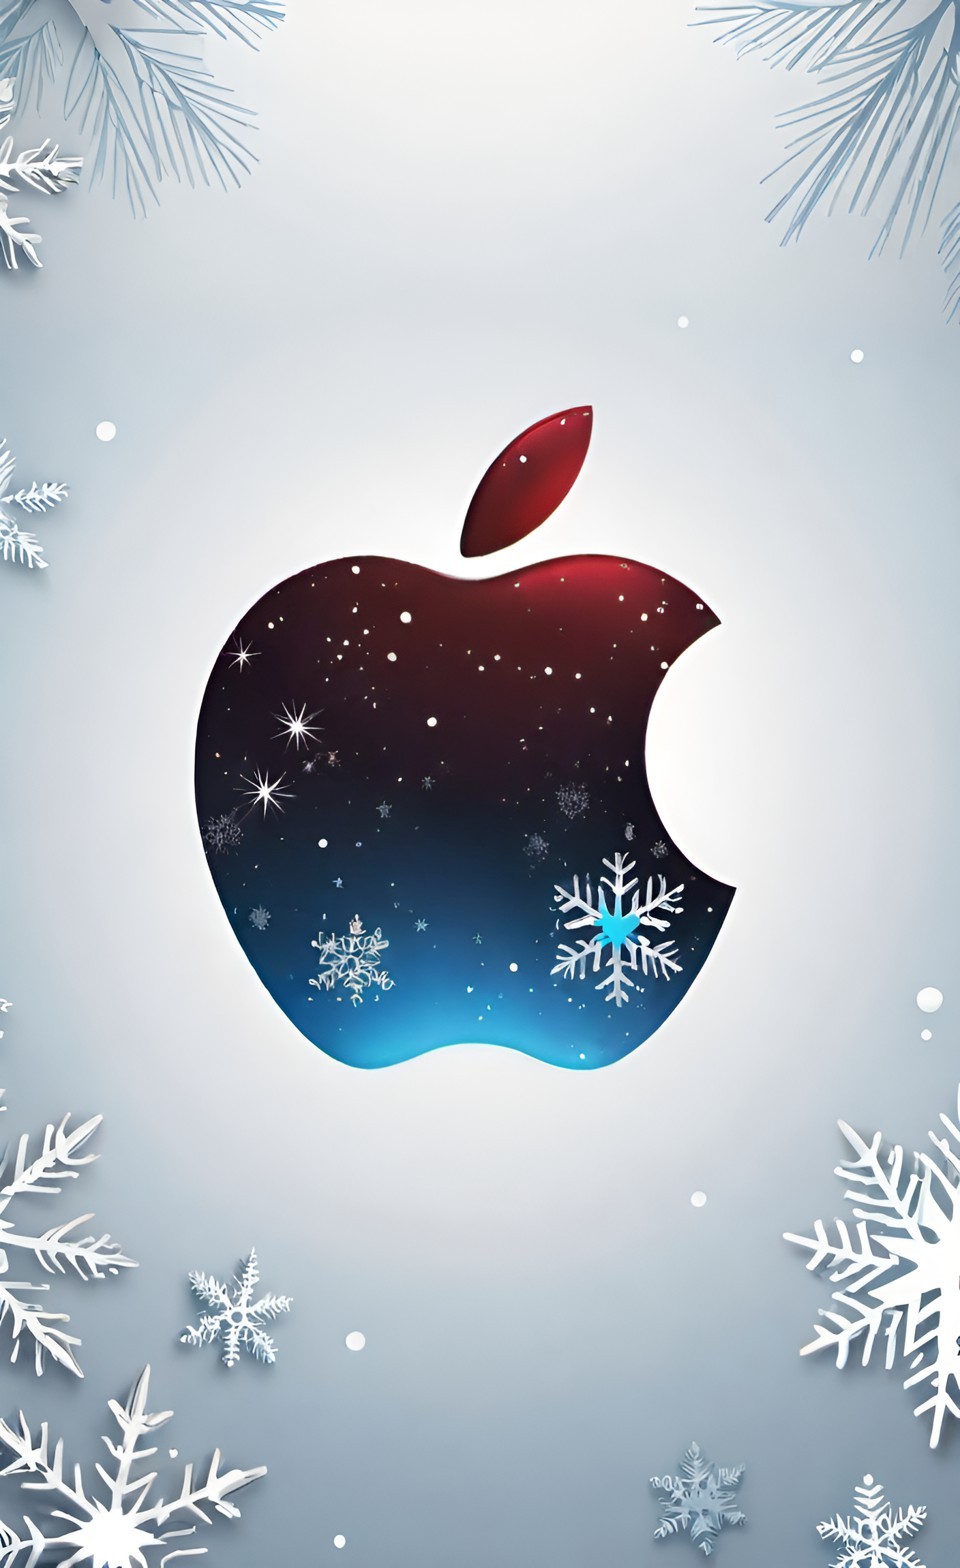 iPhone Christmas Wallpaper 4K #3 | Free Download